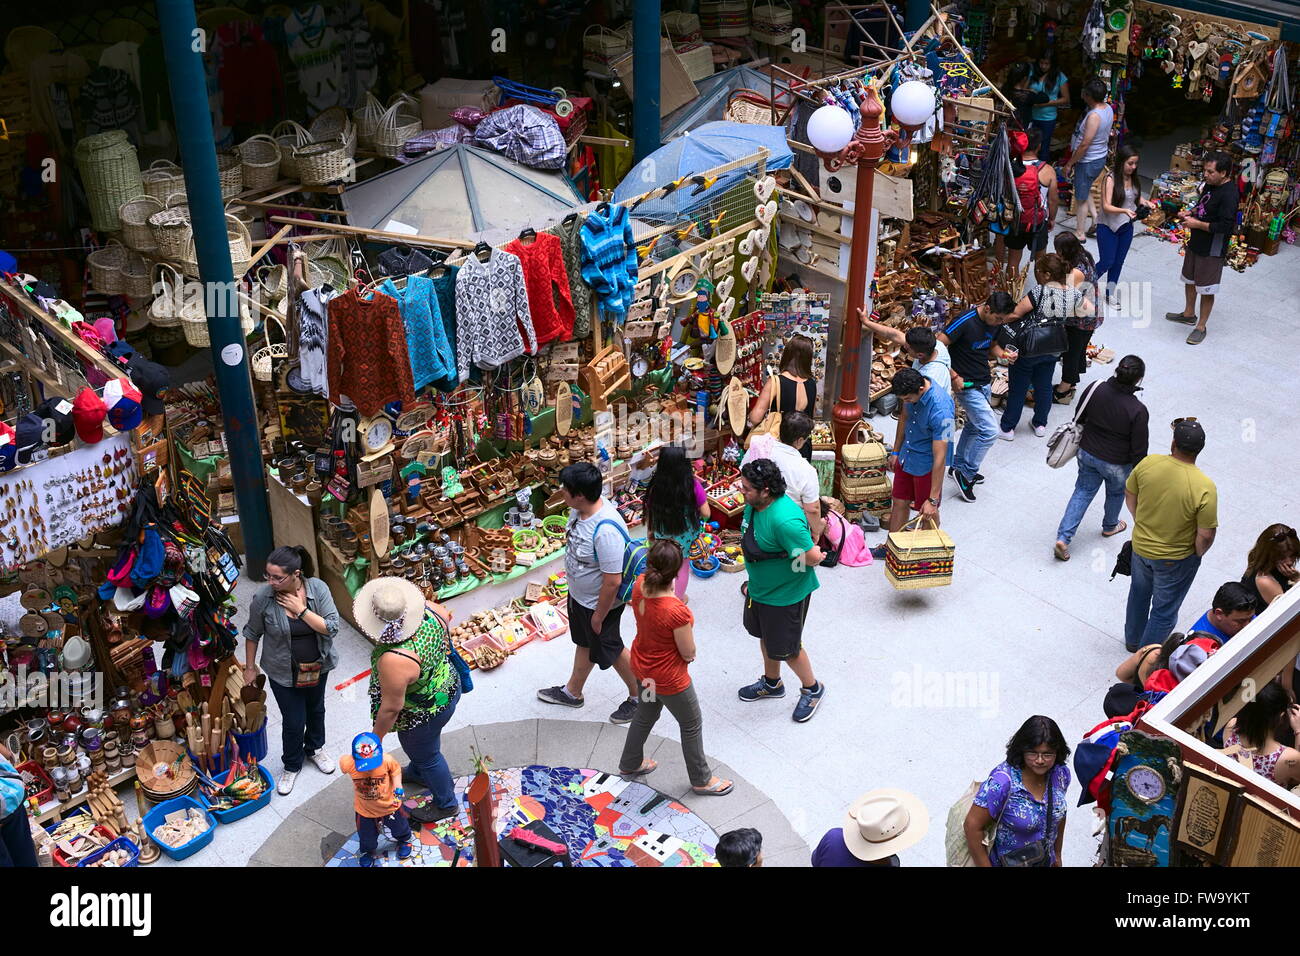 VALDIVIA, CHILE - FEBRUARY 3, 2016: Small shops selling handicrafts and souvenirs in the Mercado Municipal (municipal market) Stock Photo